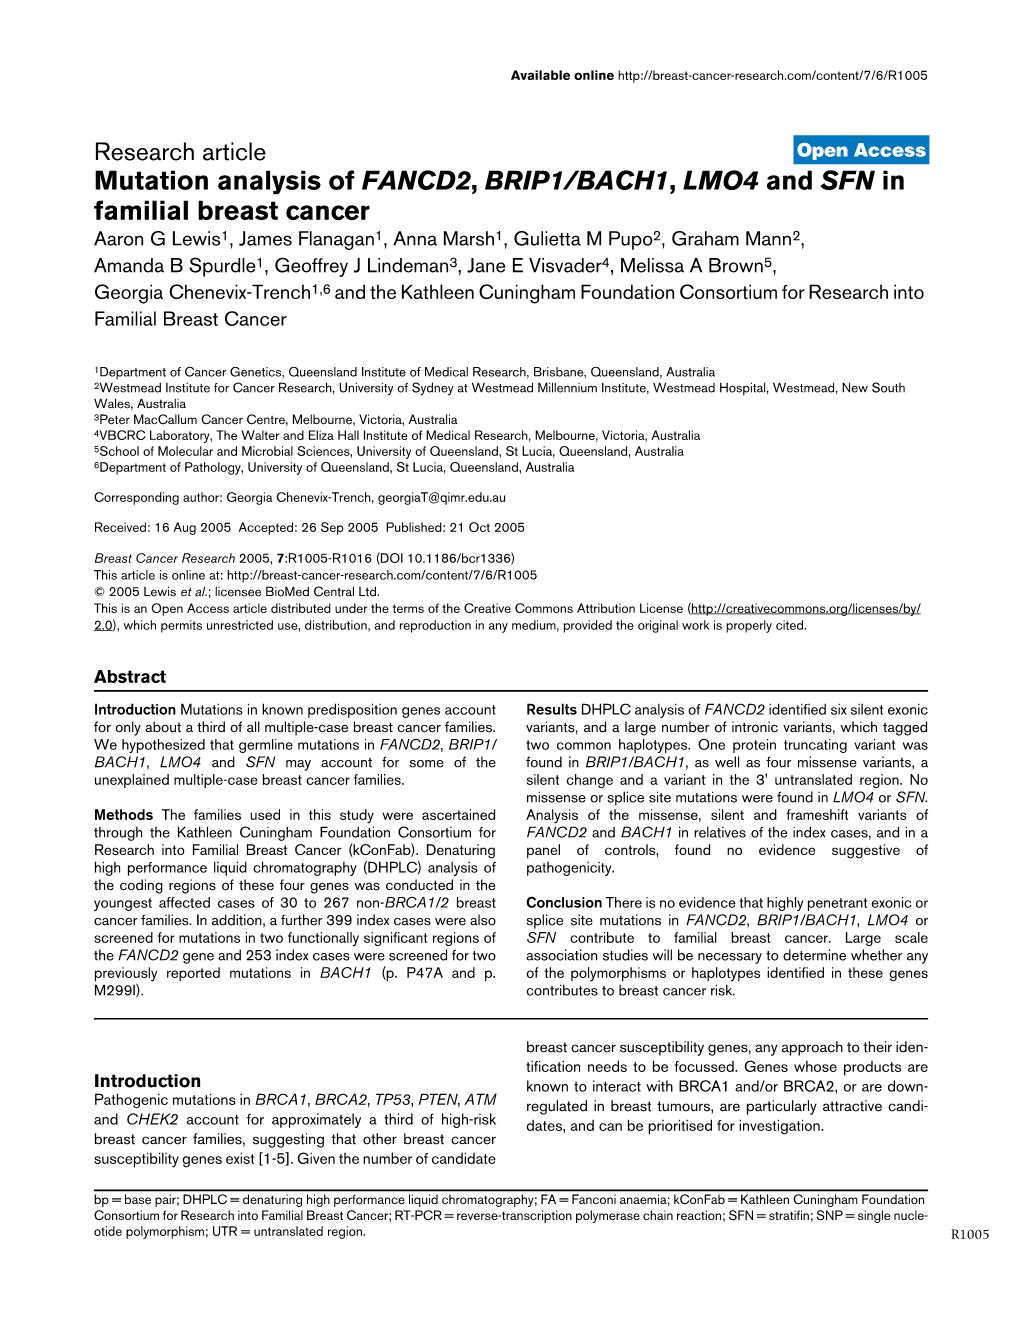 Mutation Analysis of FANCD2, BRIP1/BACH1